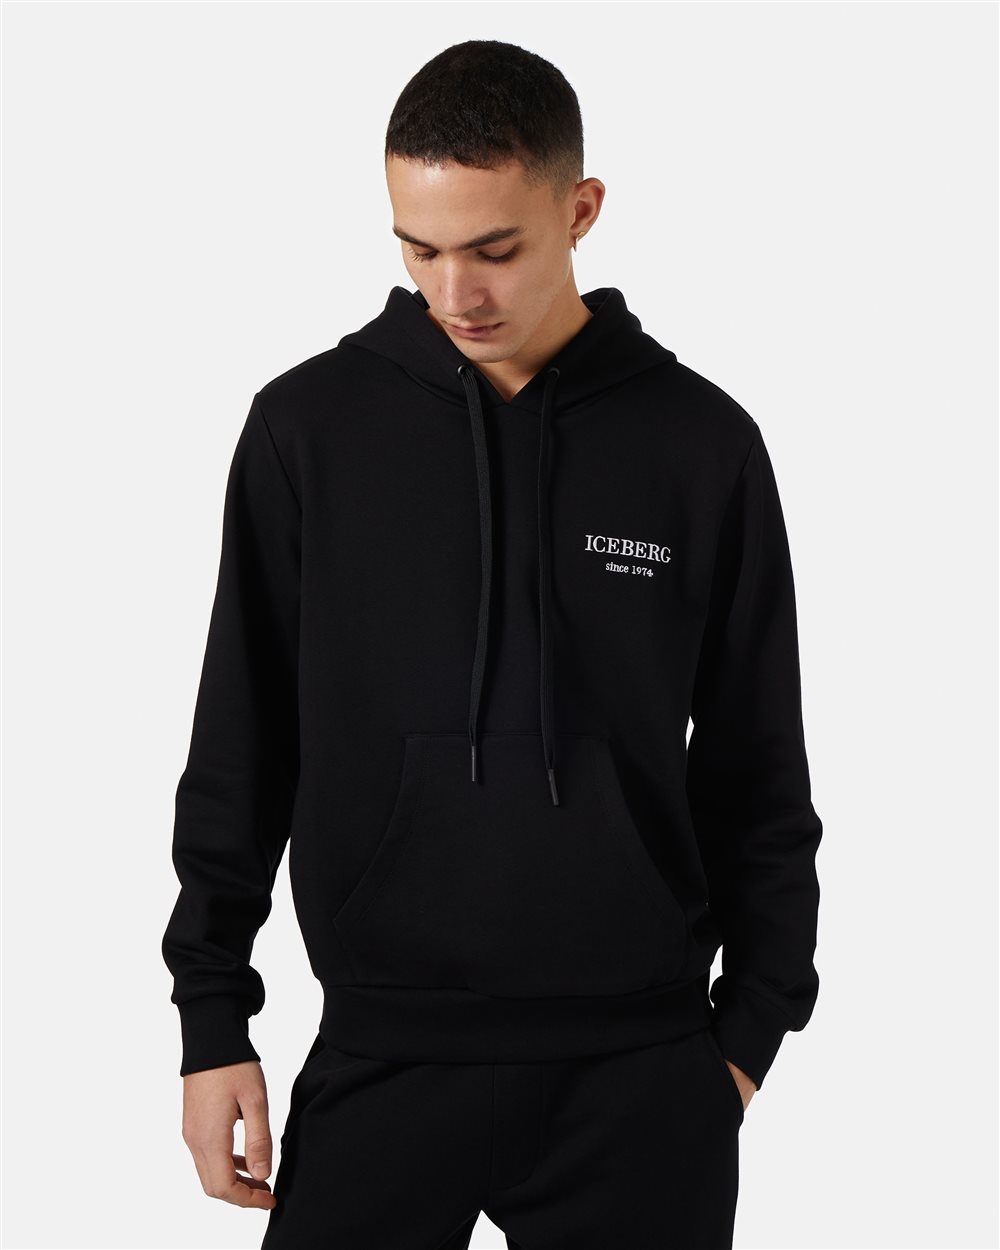 Hoodie sweatshirt with logo - Iceberg - Official Website